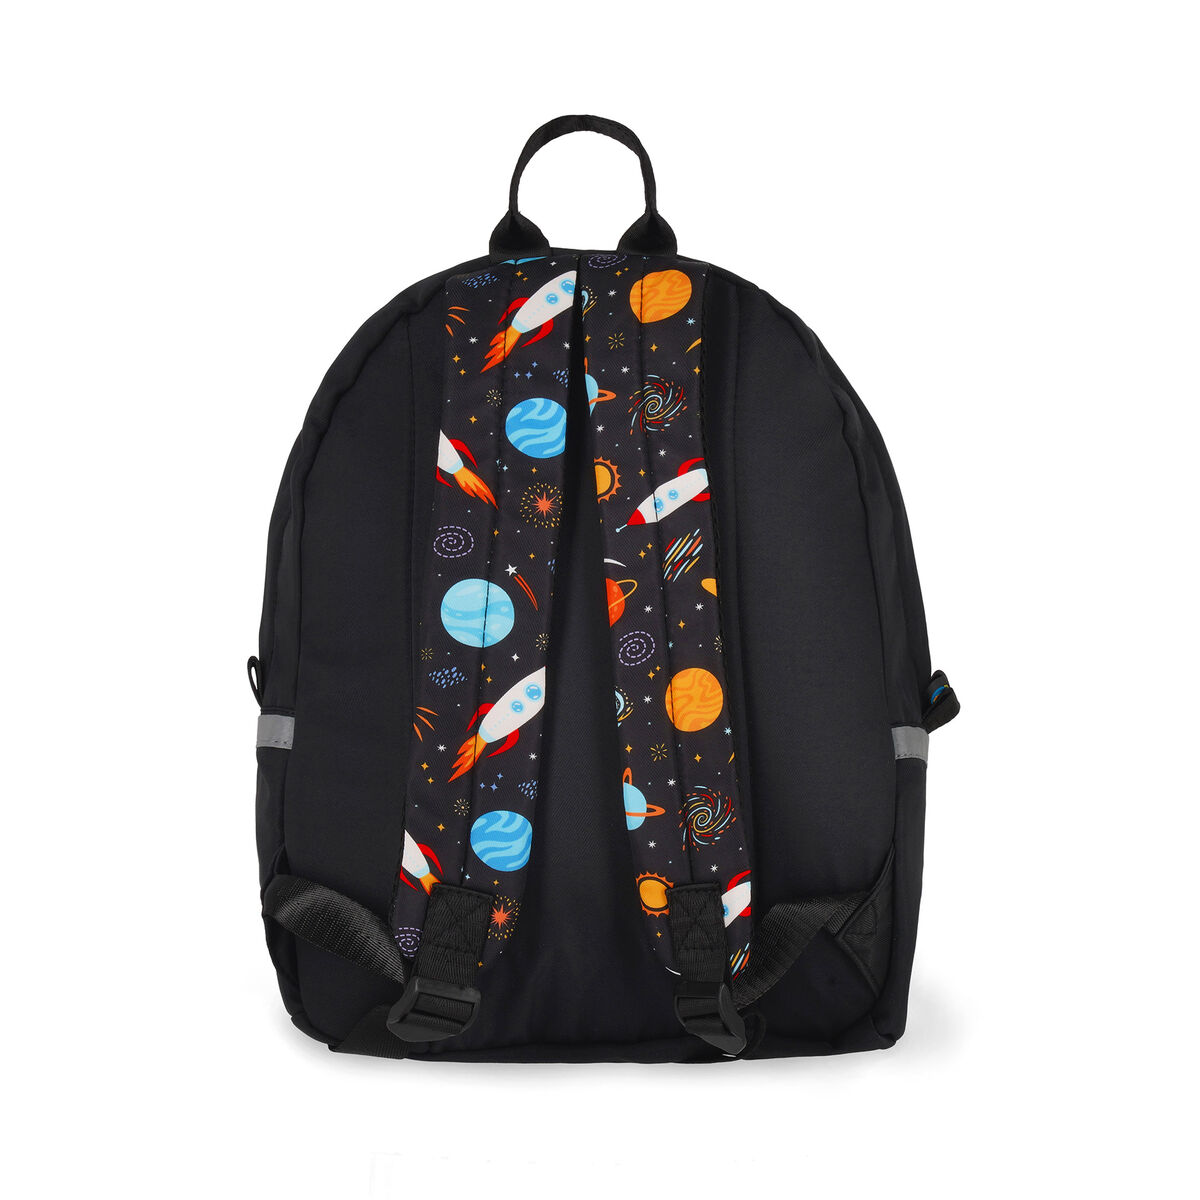 Rucksack mit abnehmbarer Tasche - So Cute!, , zoo